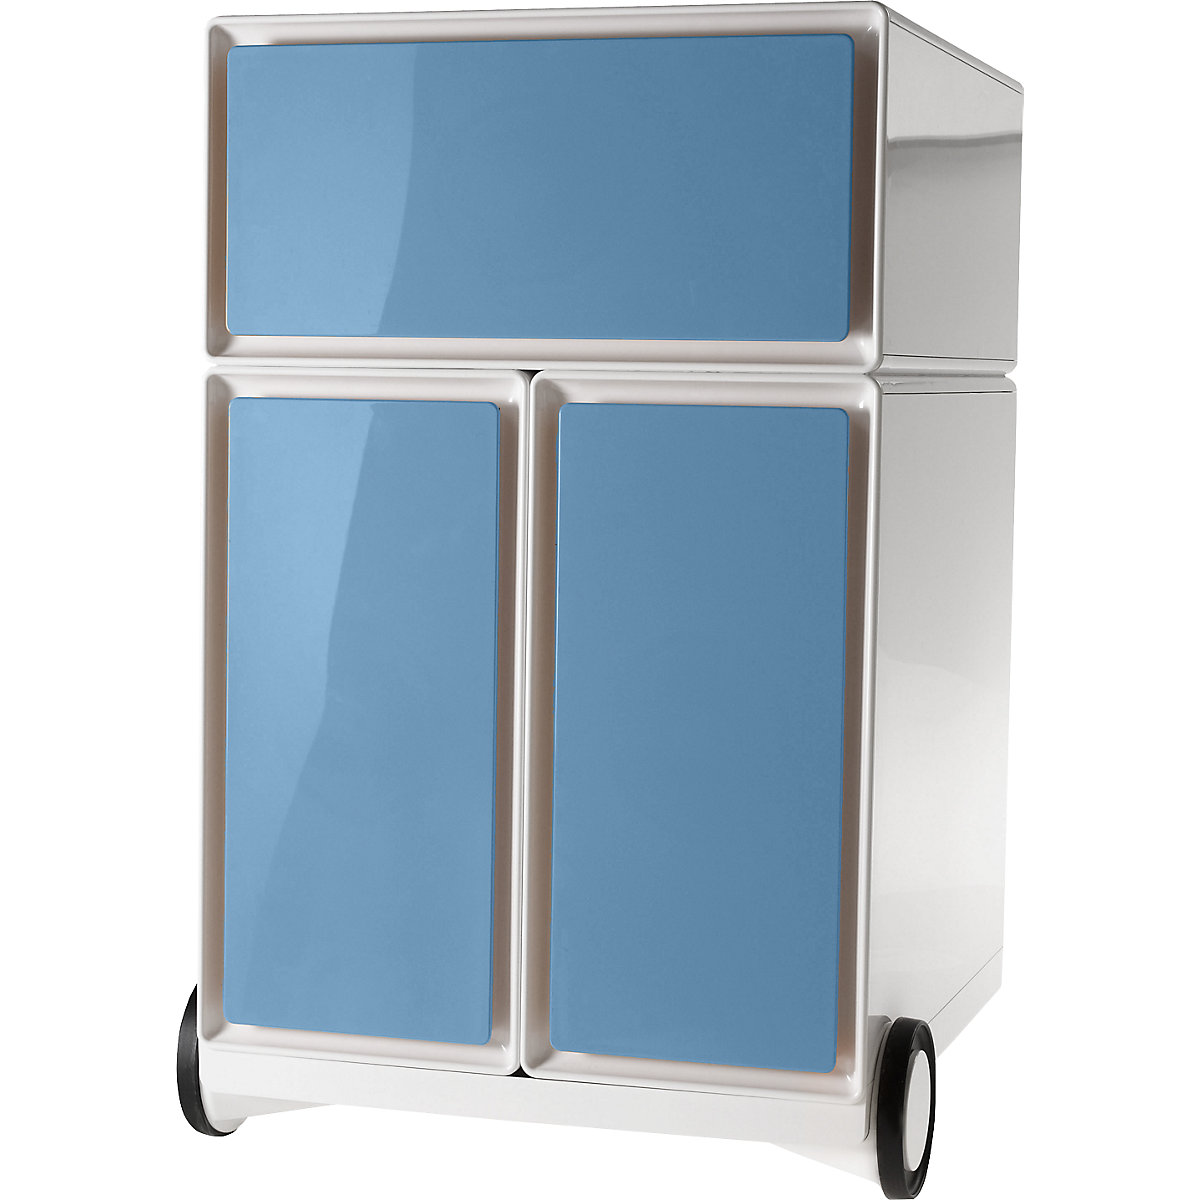 Pojízdný kontejner easyBox® – Paperflow, 1 zásuvka, 2 výsuvy pro závěsné složky, bílá / modrá-8